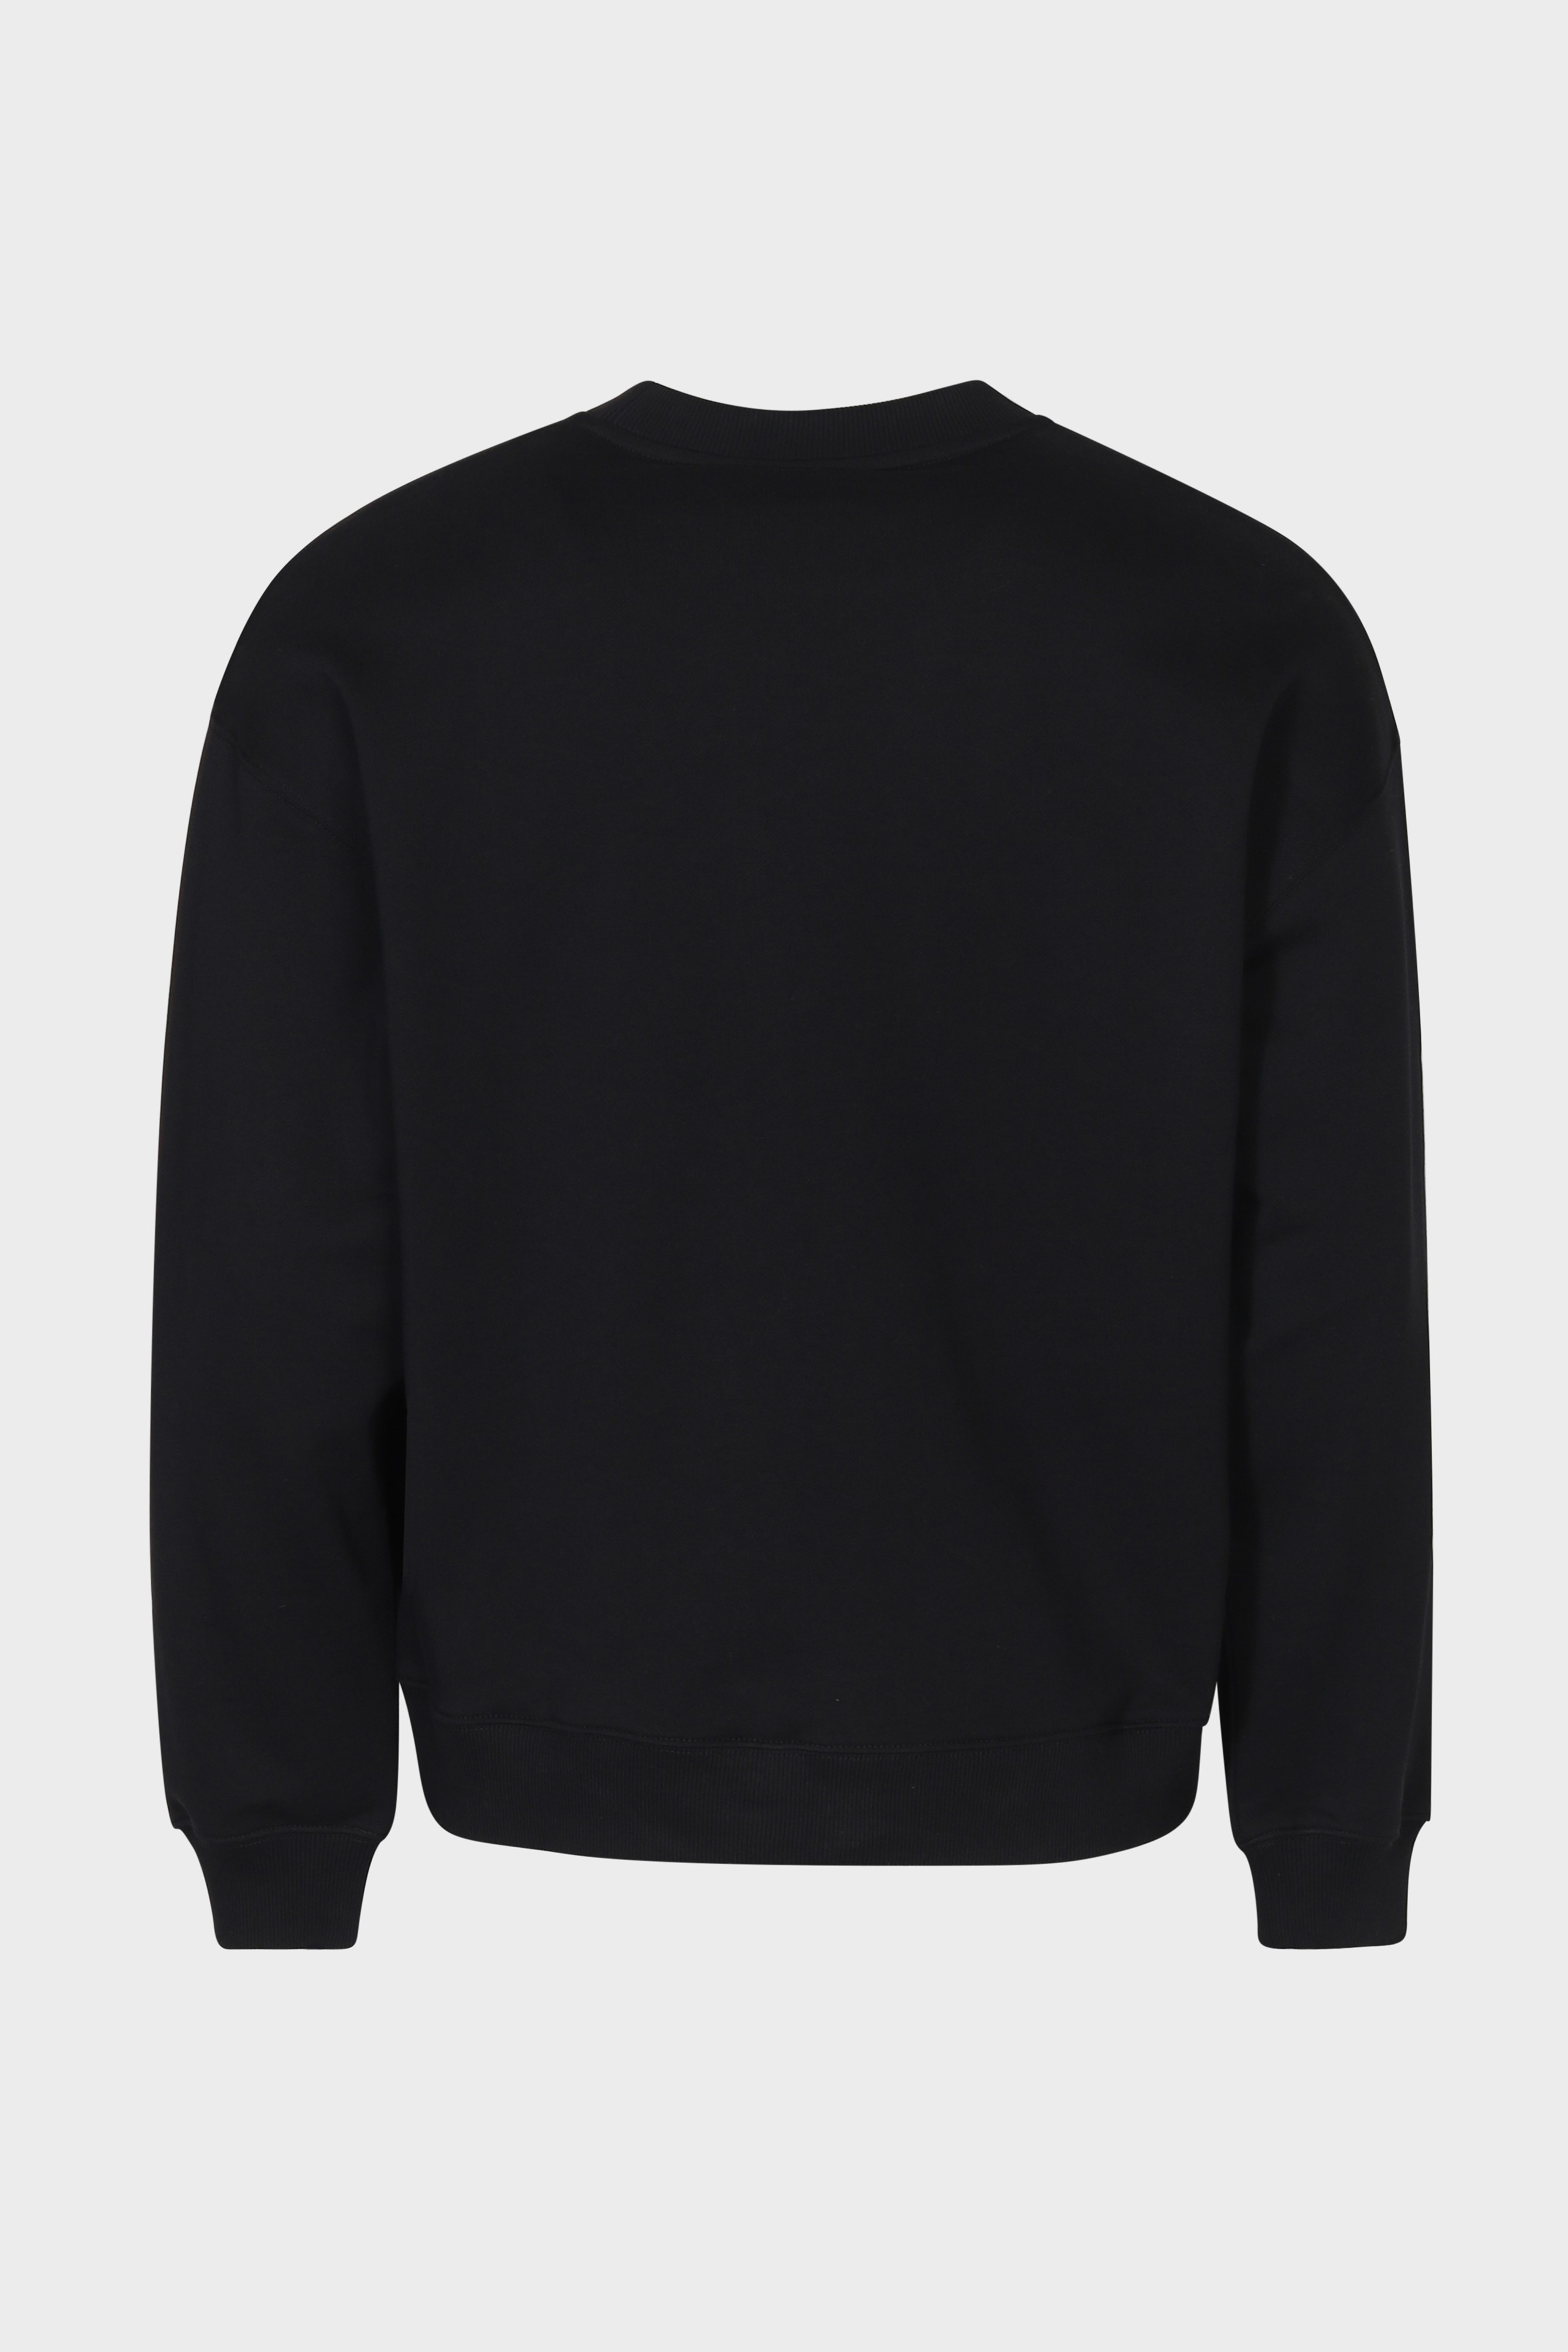 AXEL ARIGATO Spade Sweatshirt in Black M